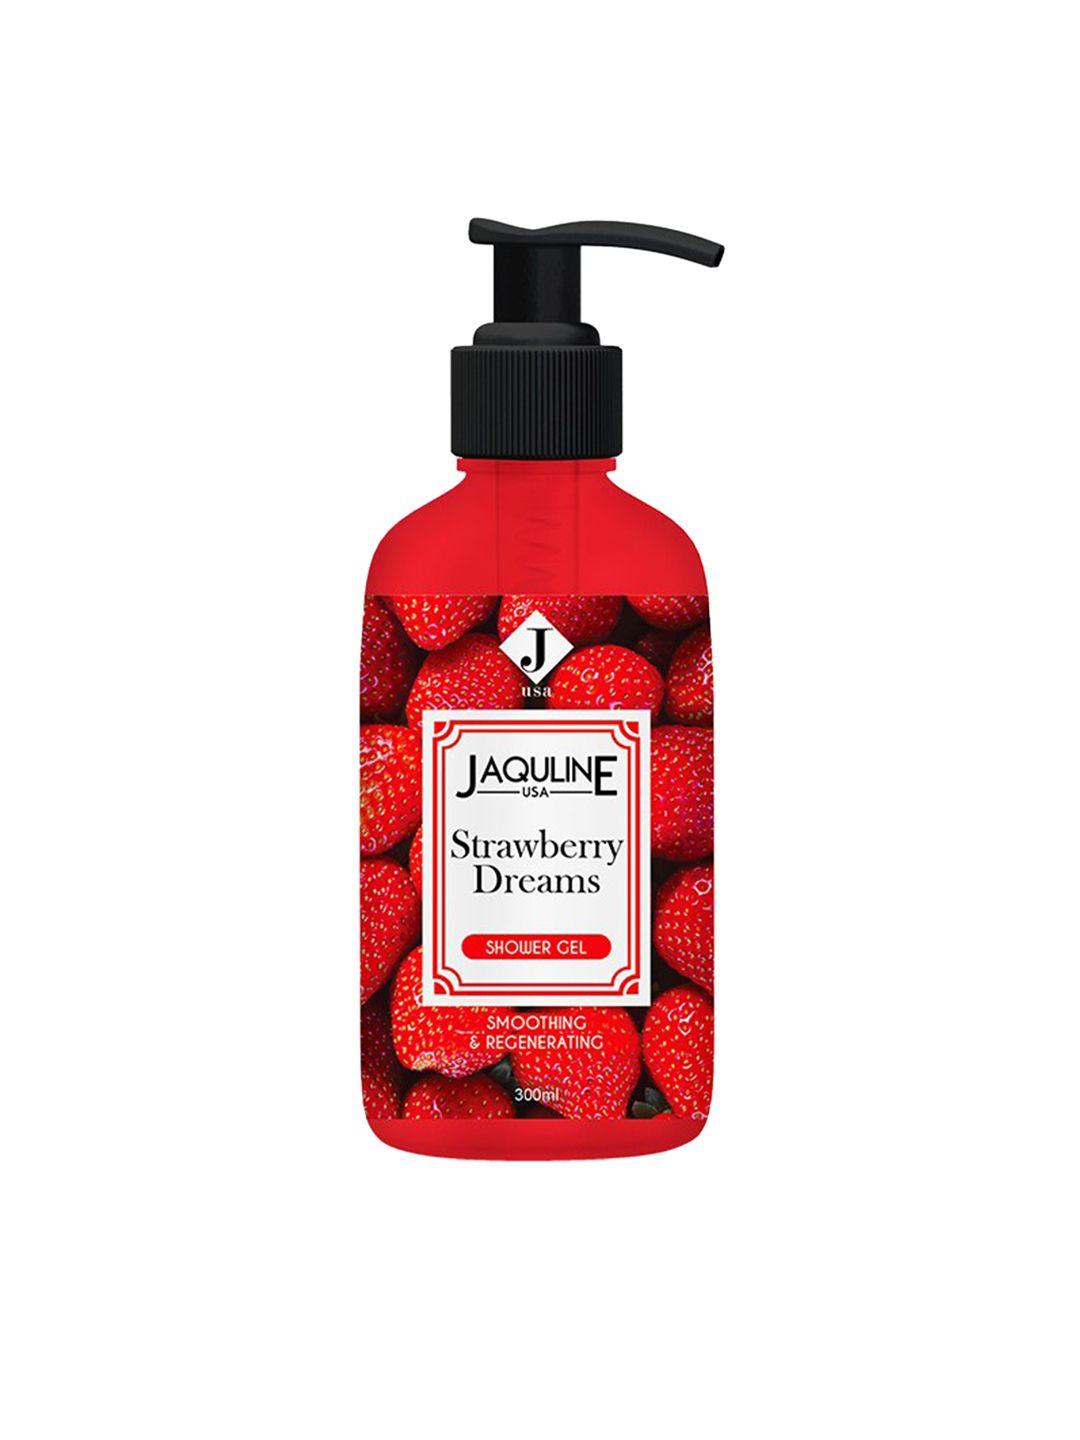 jaquline usa strawberry dreams shower gel - 300 ml